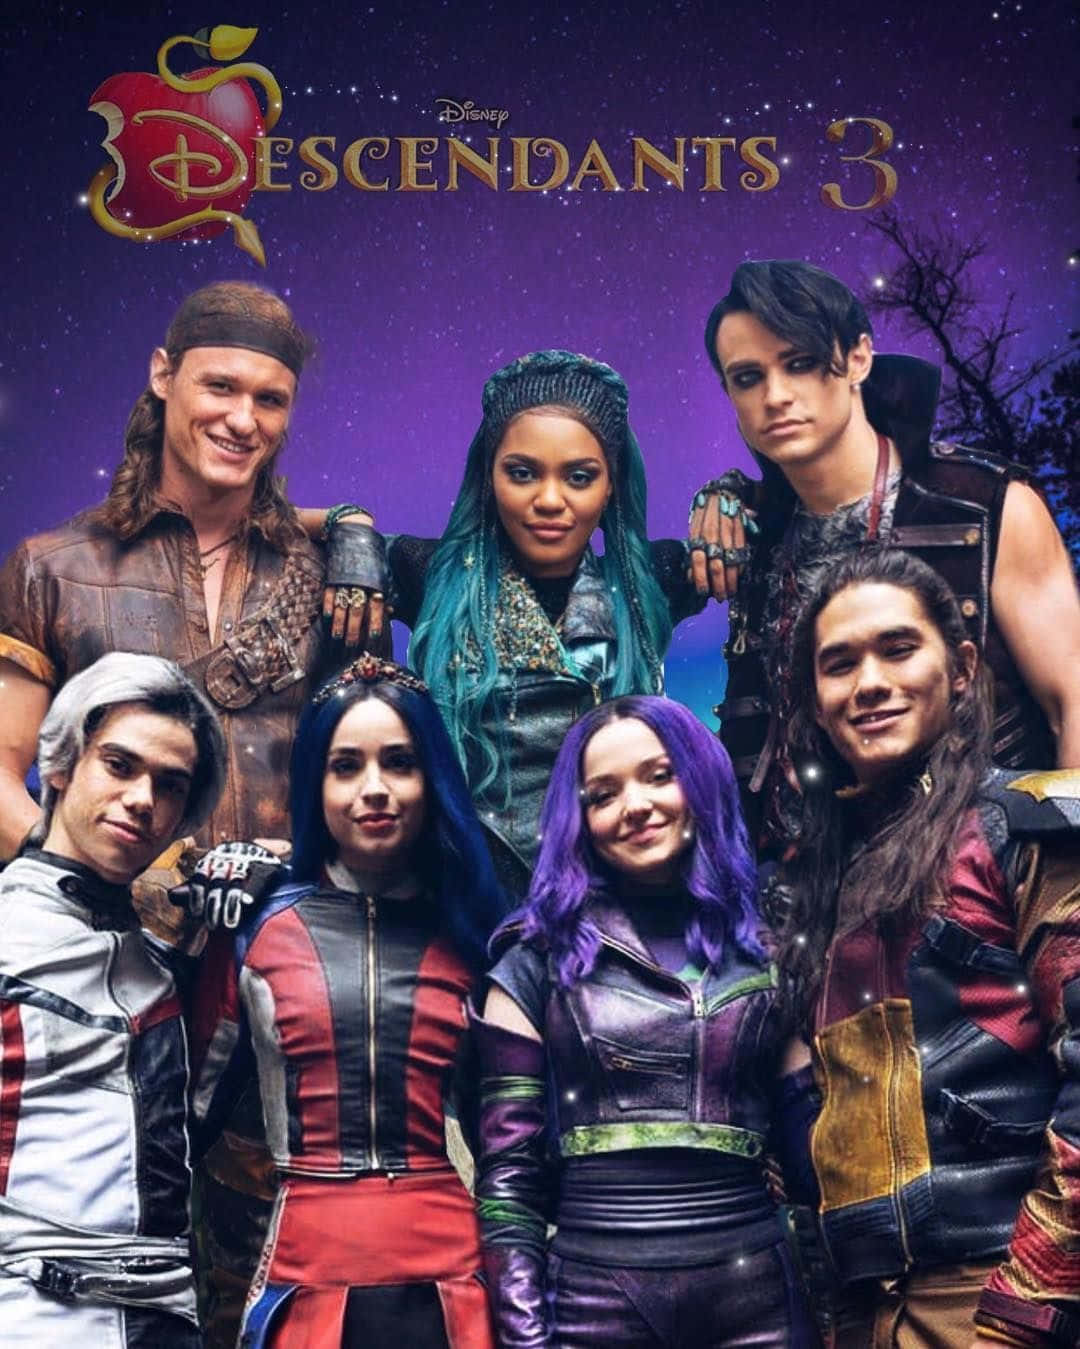 The main cast of Disney's Descendants movie posing together